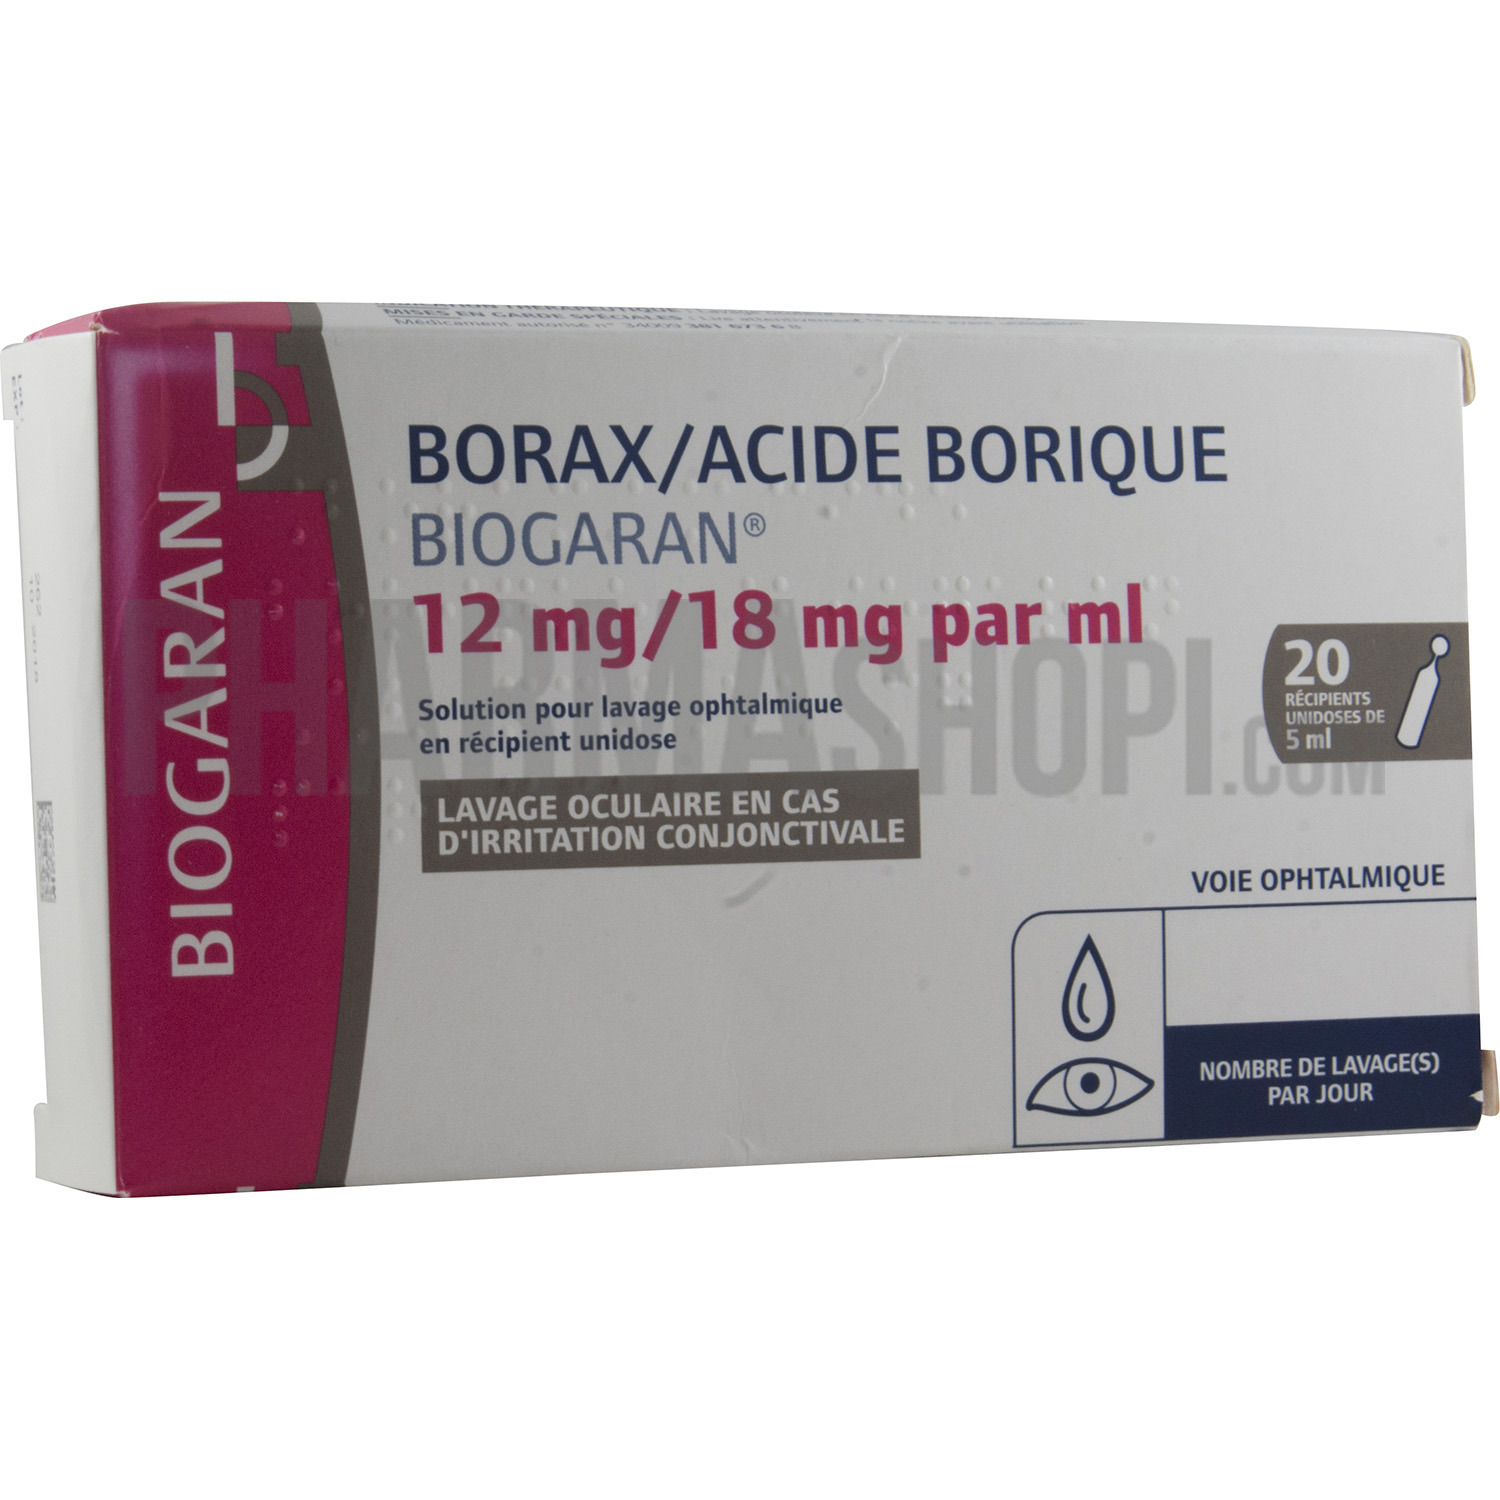 Borax acide borique Biogaran - 20 unidoses de 5 ml